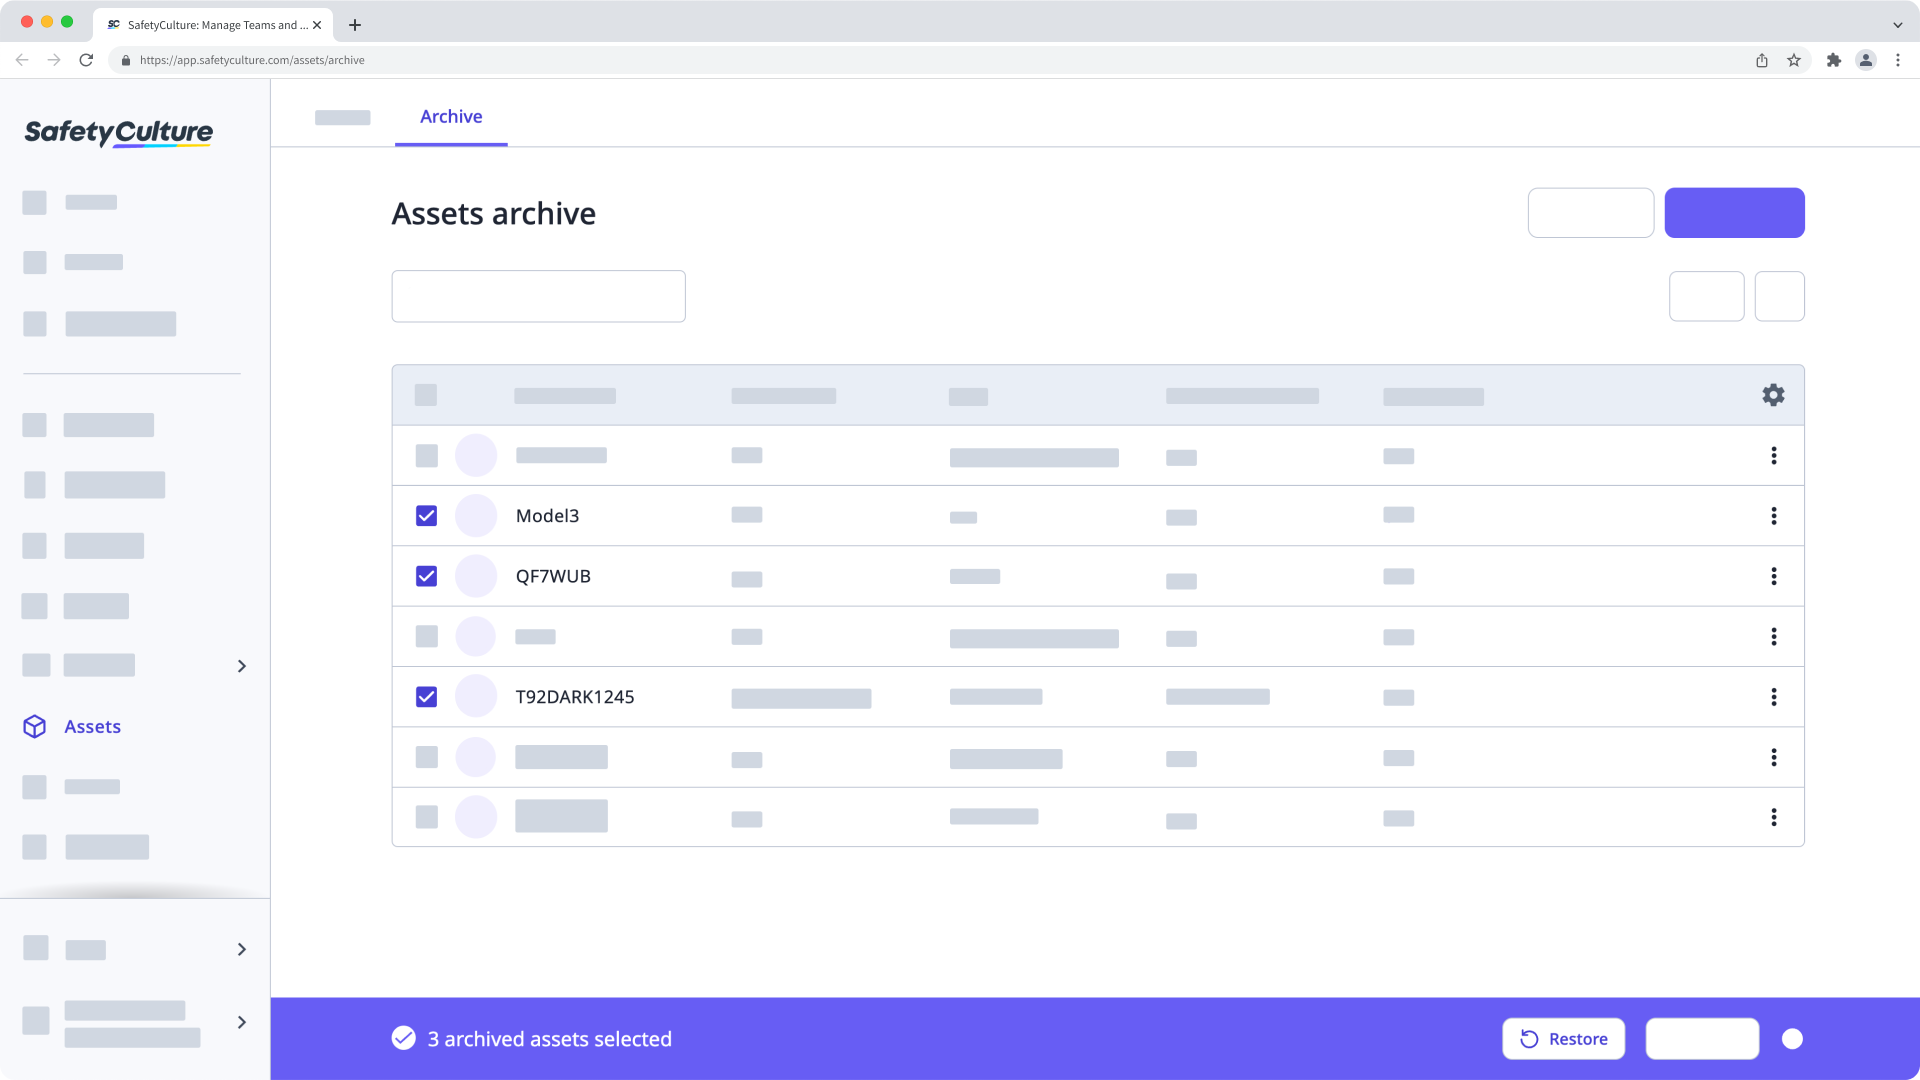 Bulk restore archived assets via the web app.